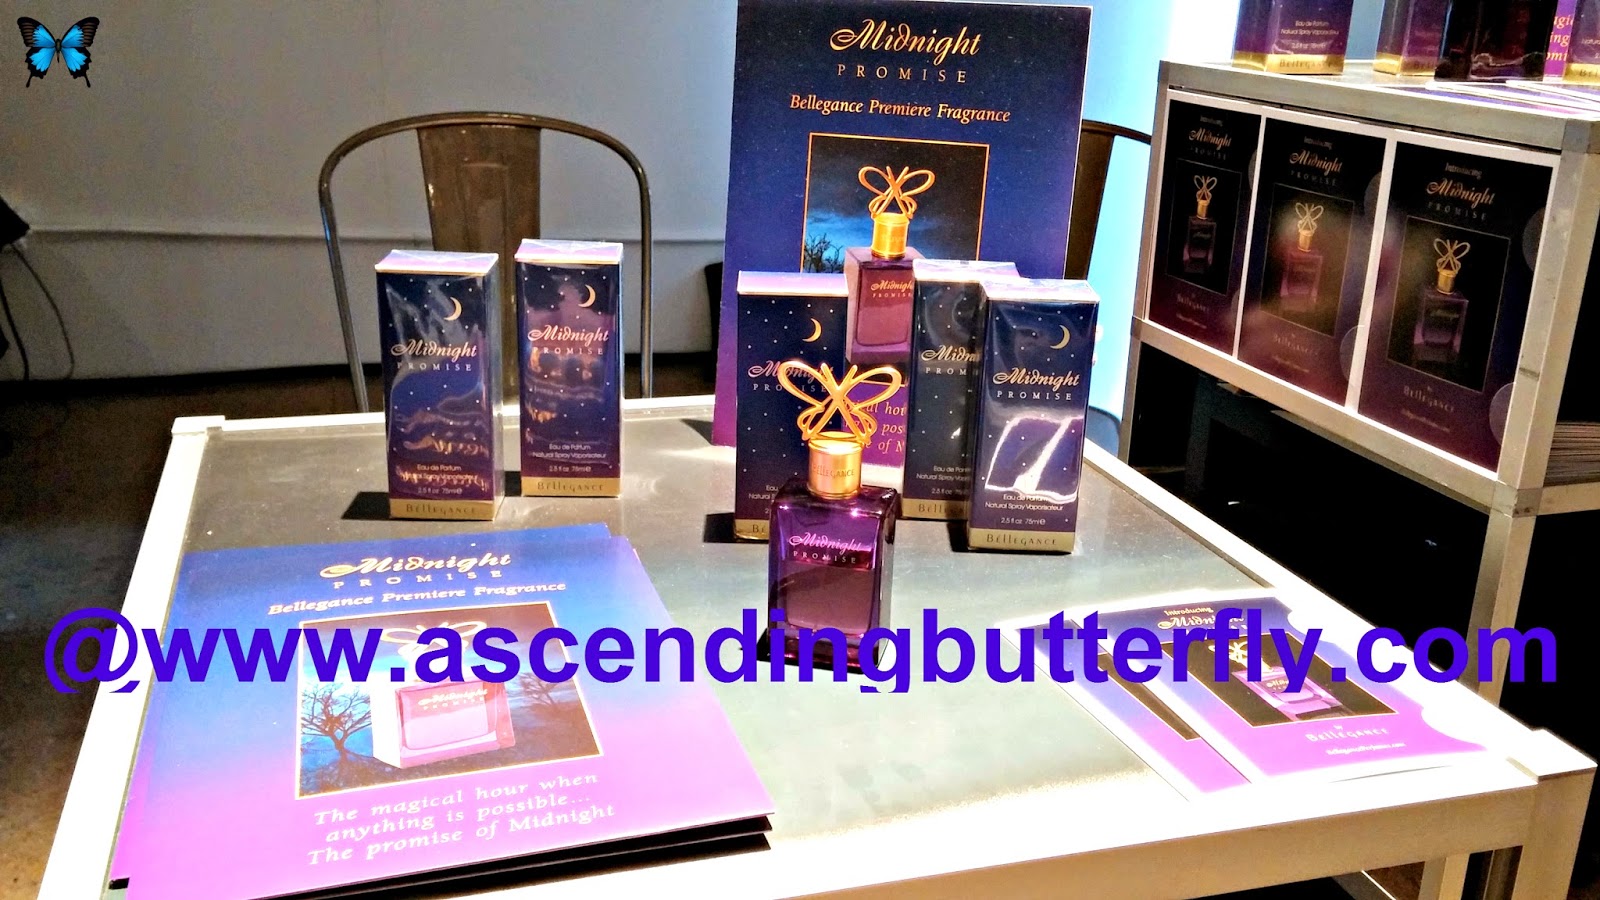 Bellegance Perfumes premiere fragrance Midnight Promise, a beautiful Eau de Parfum, butterfly bottle